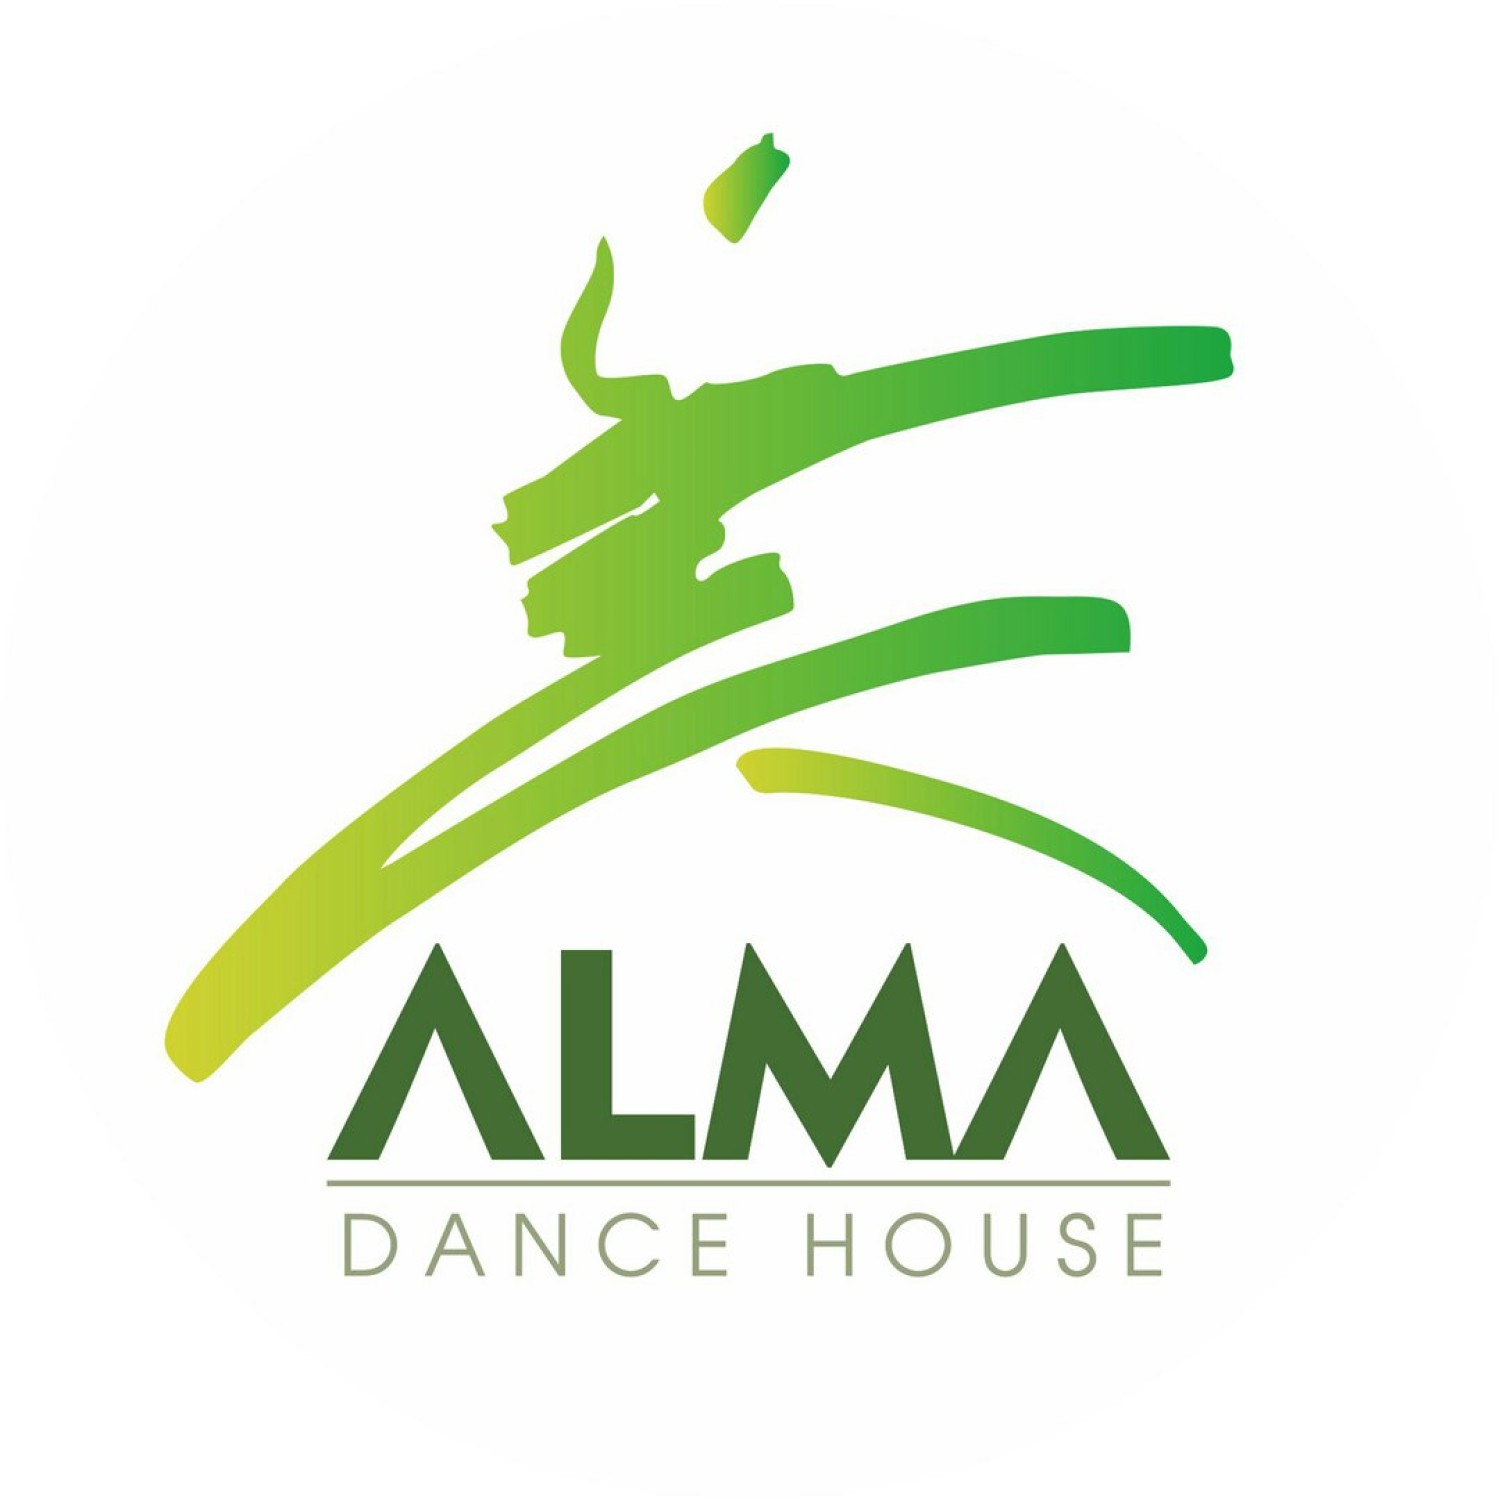 Dance House "ALMA"